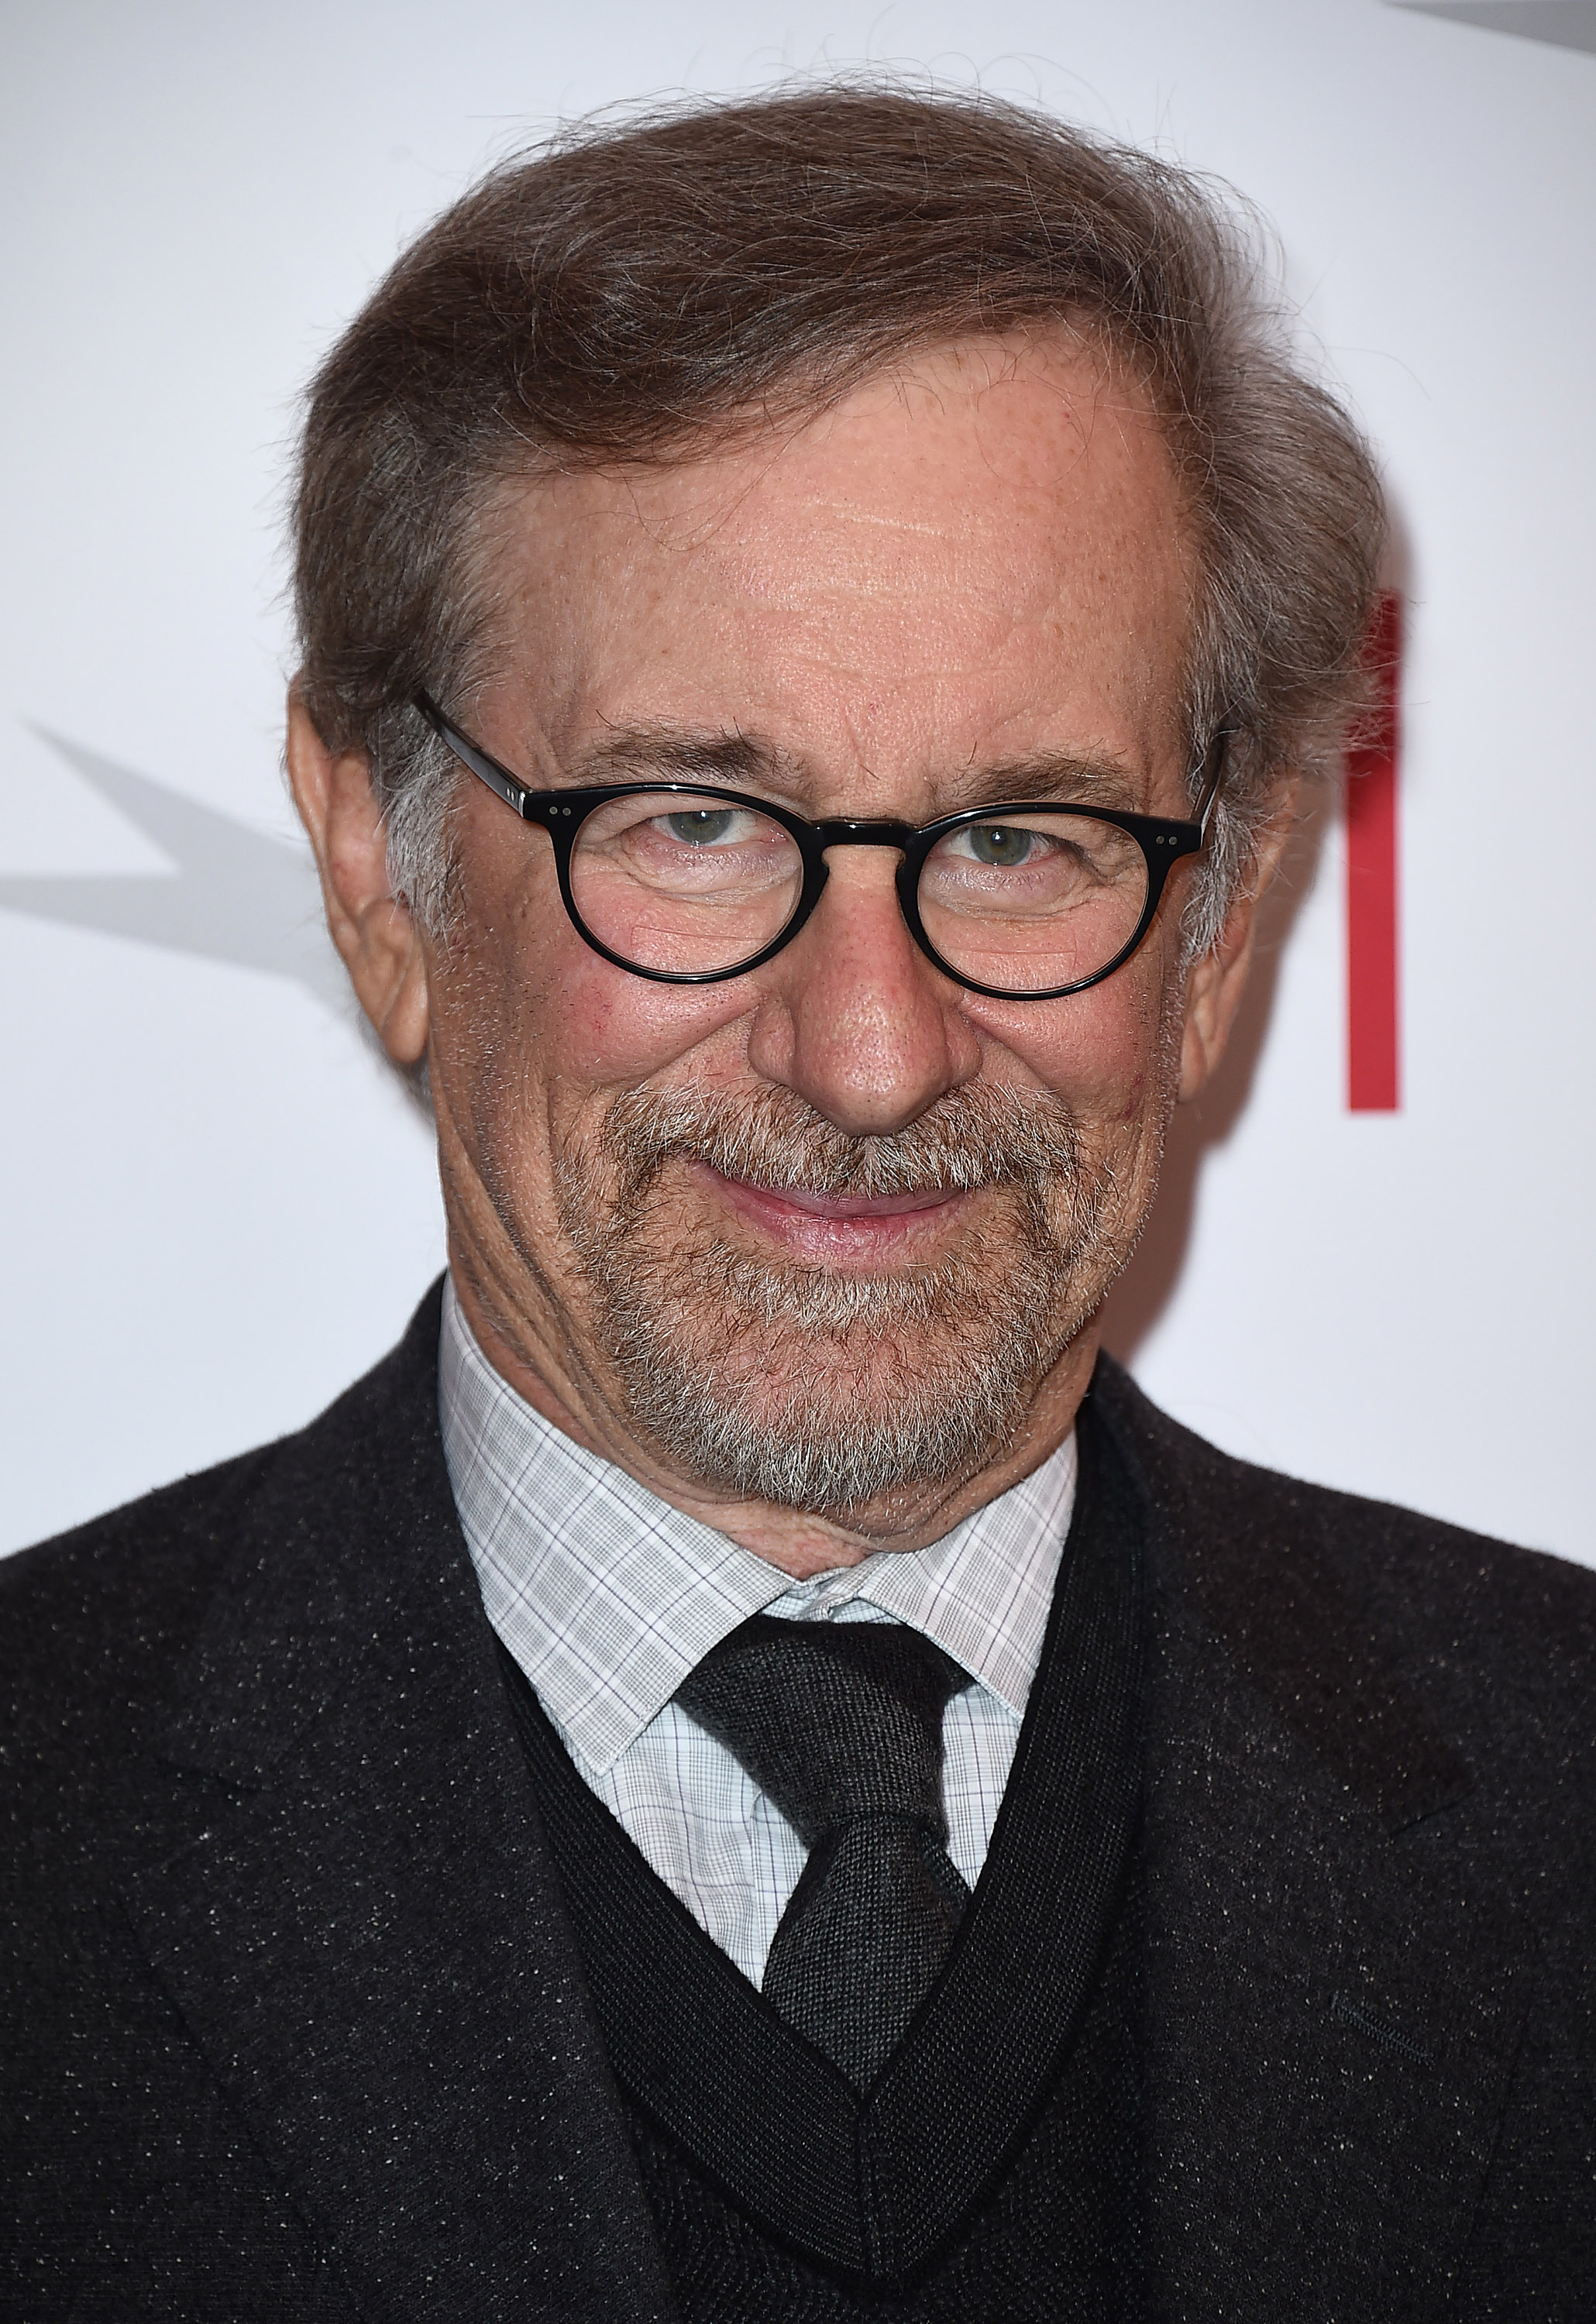 Steven Spielberg arrives at the AFI Awards in Los Angeles on Jan. 9, 2015.